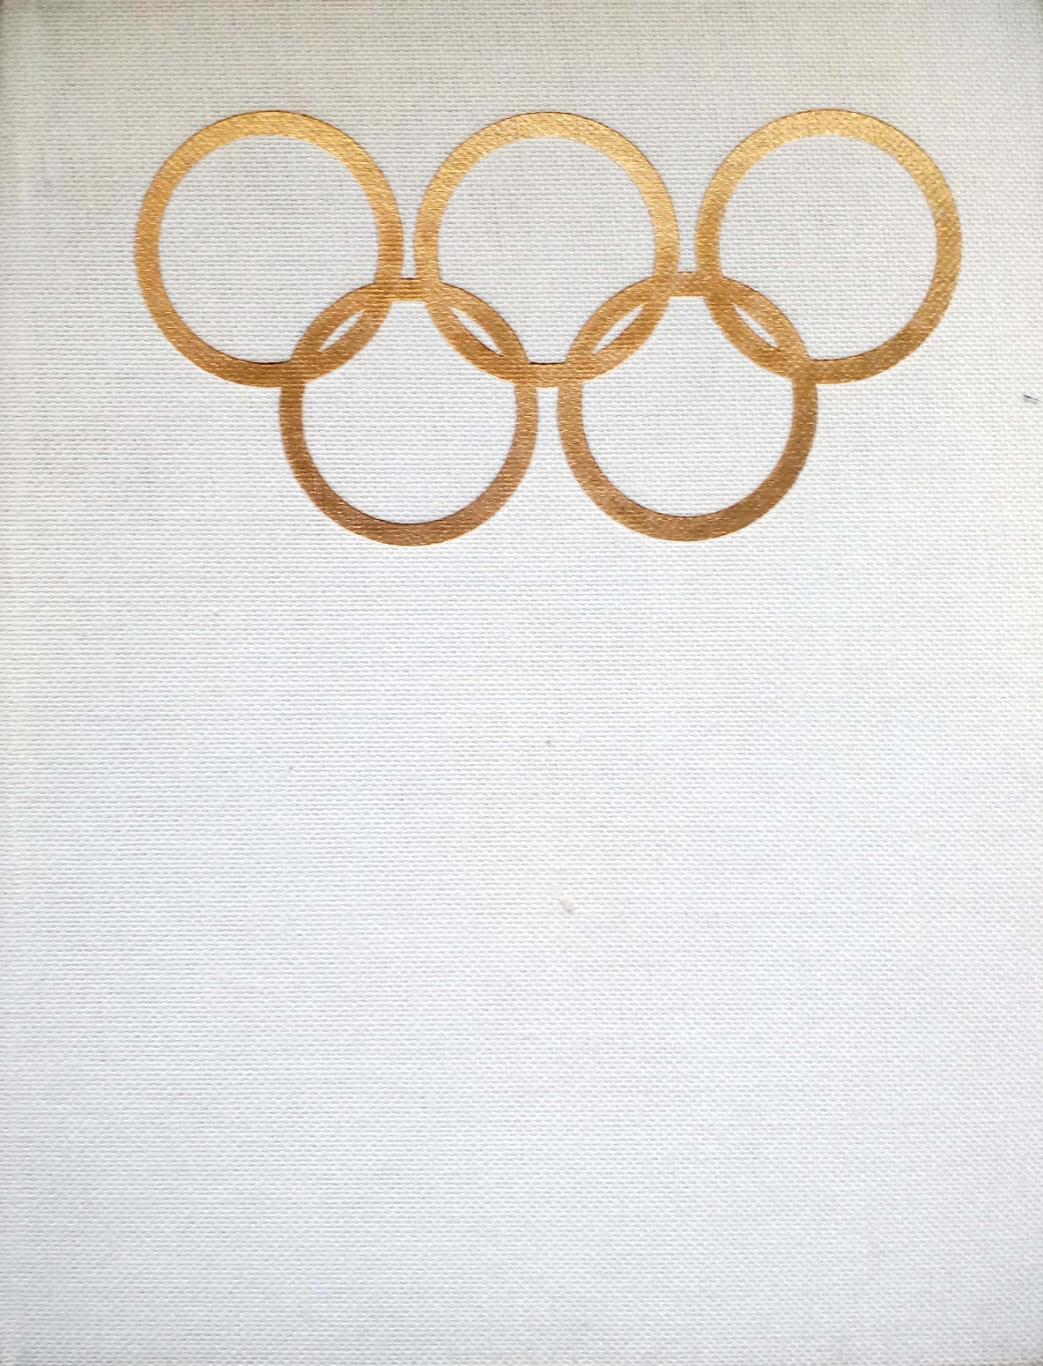 Год '72 олимпийский. ФиС (1973)